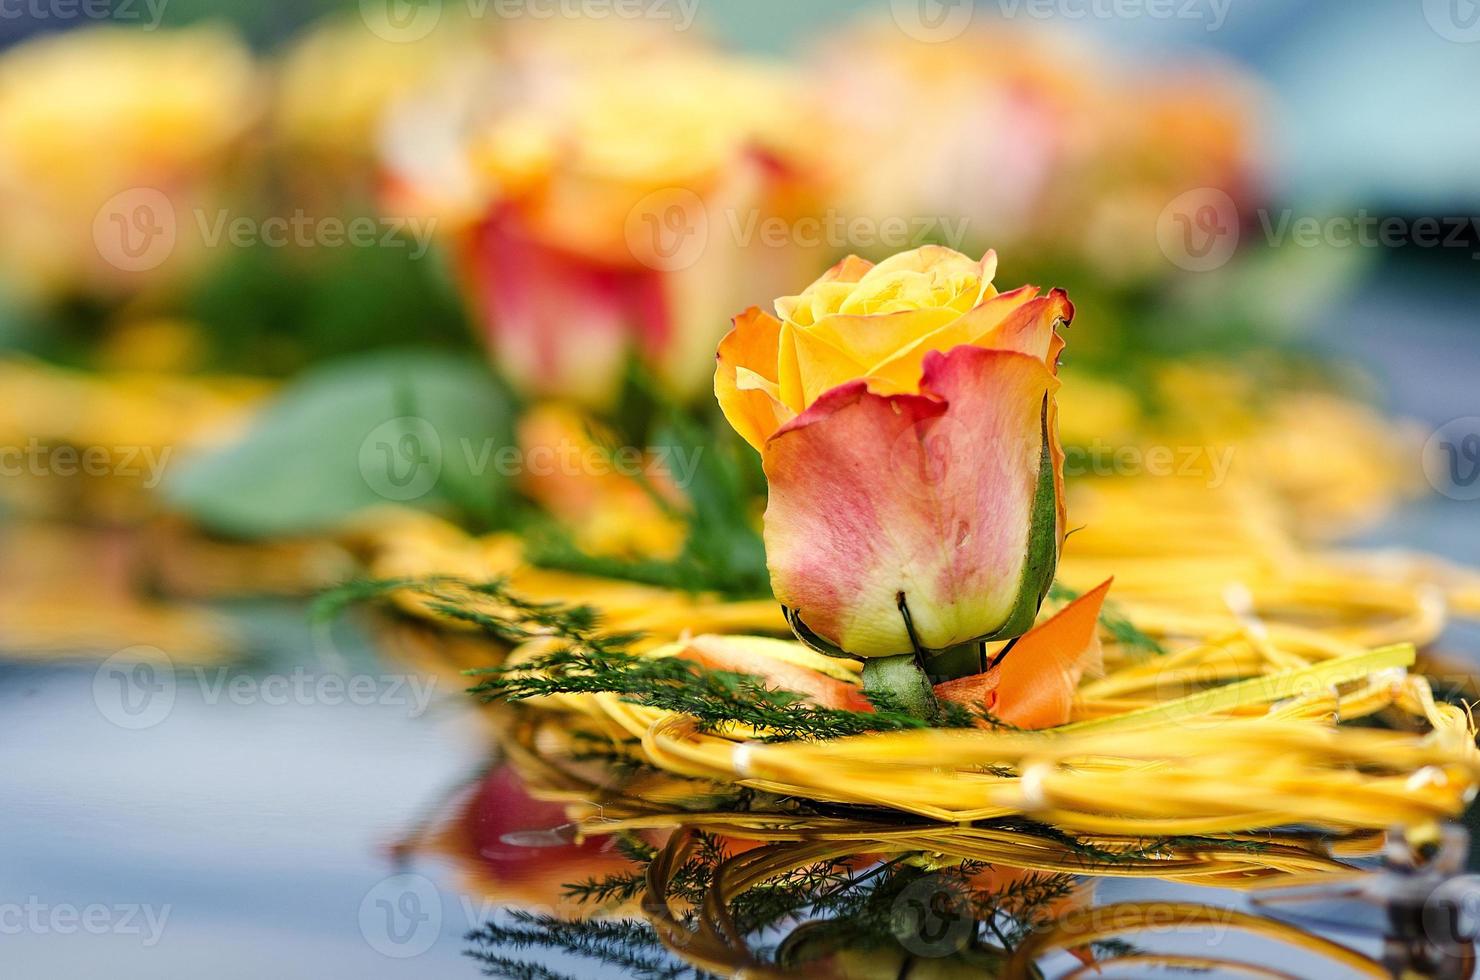 Close-up photography. Wedding car decoration of yellow roses. photo